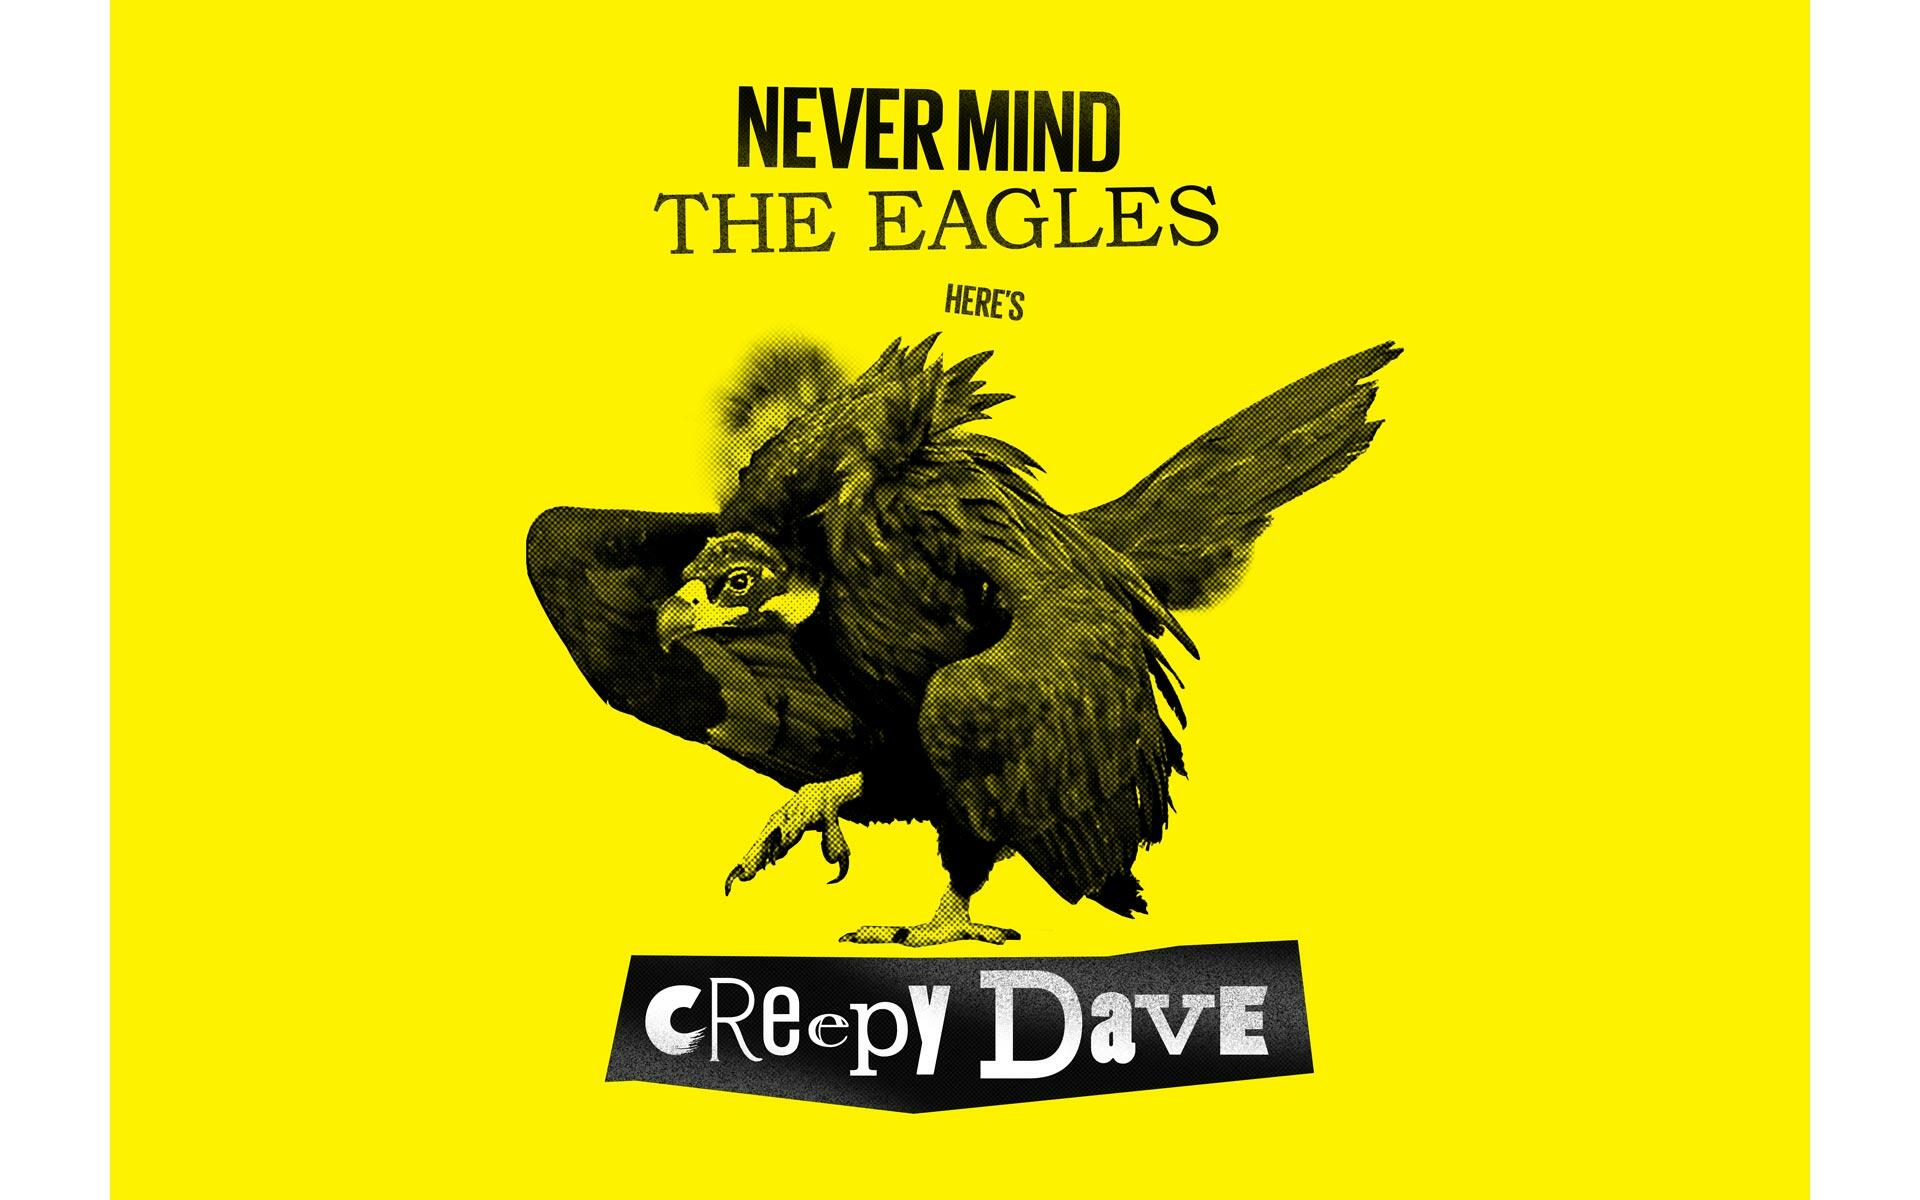 Creepy-Dave-nevermind@2x.jpg